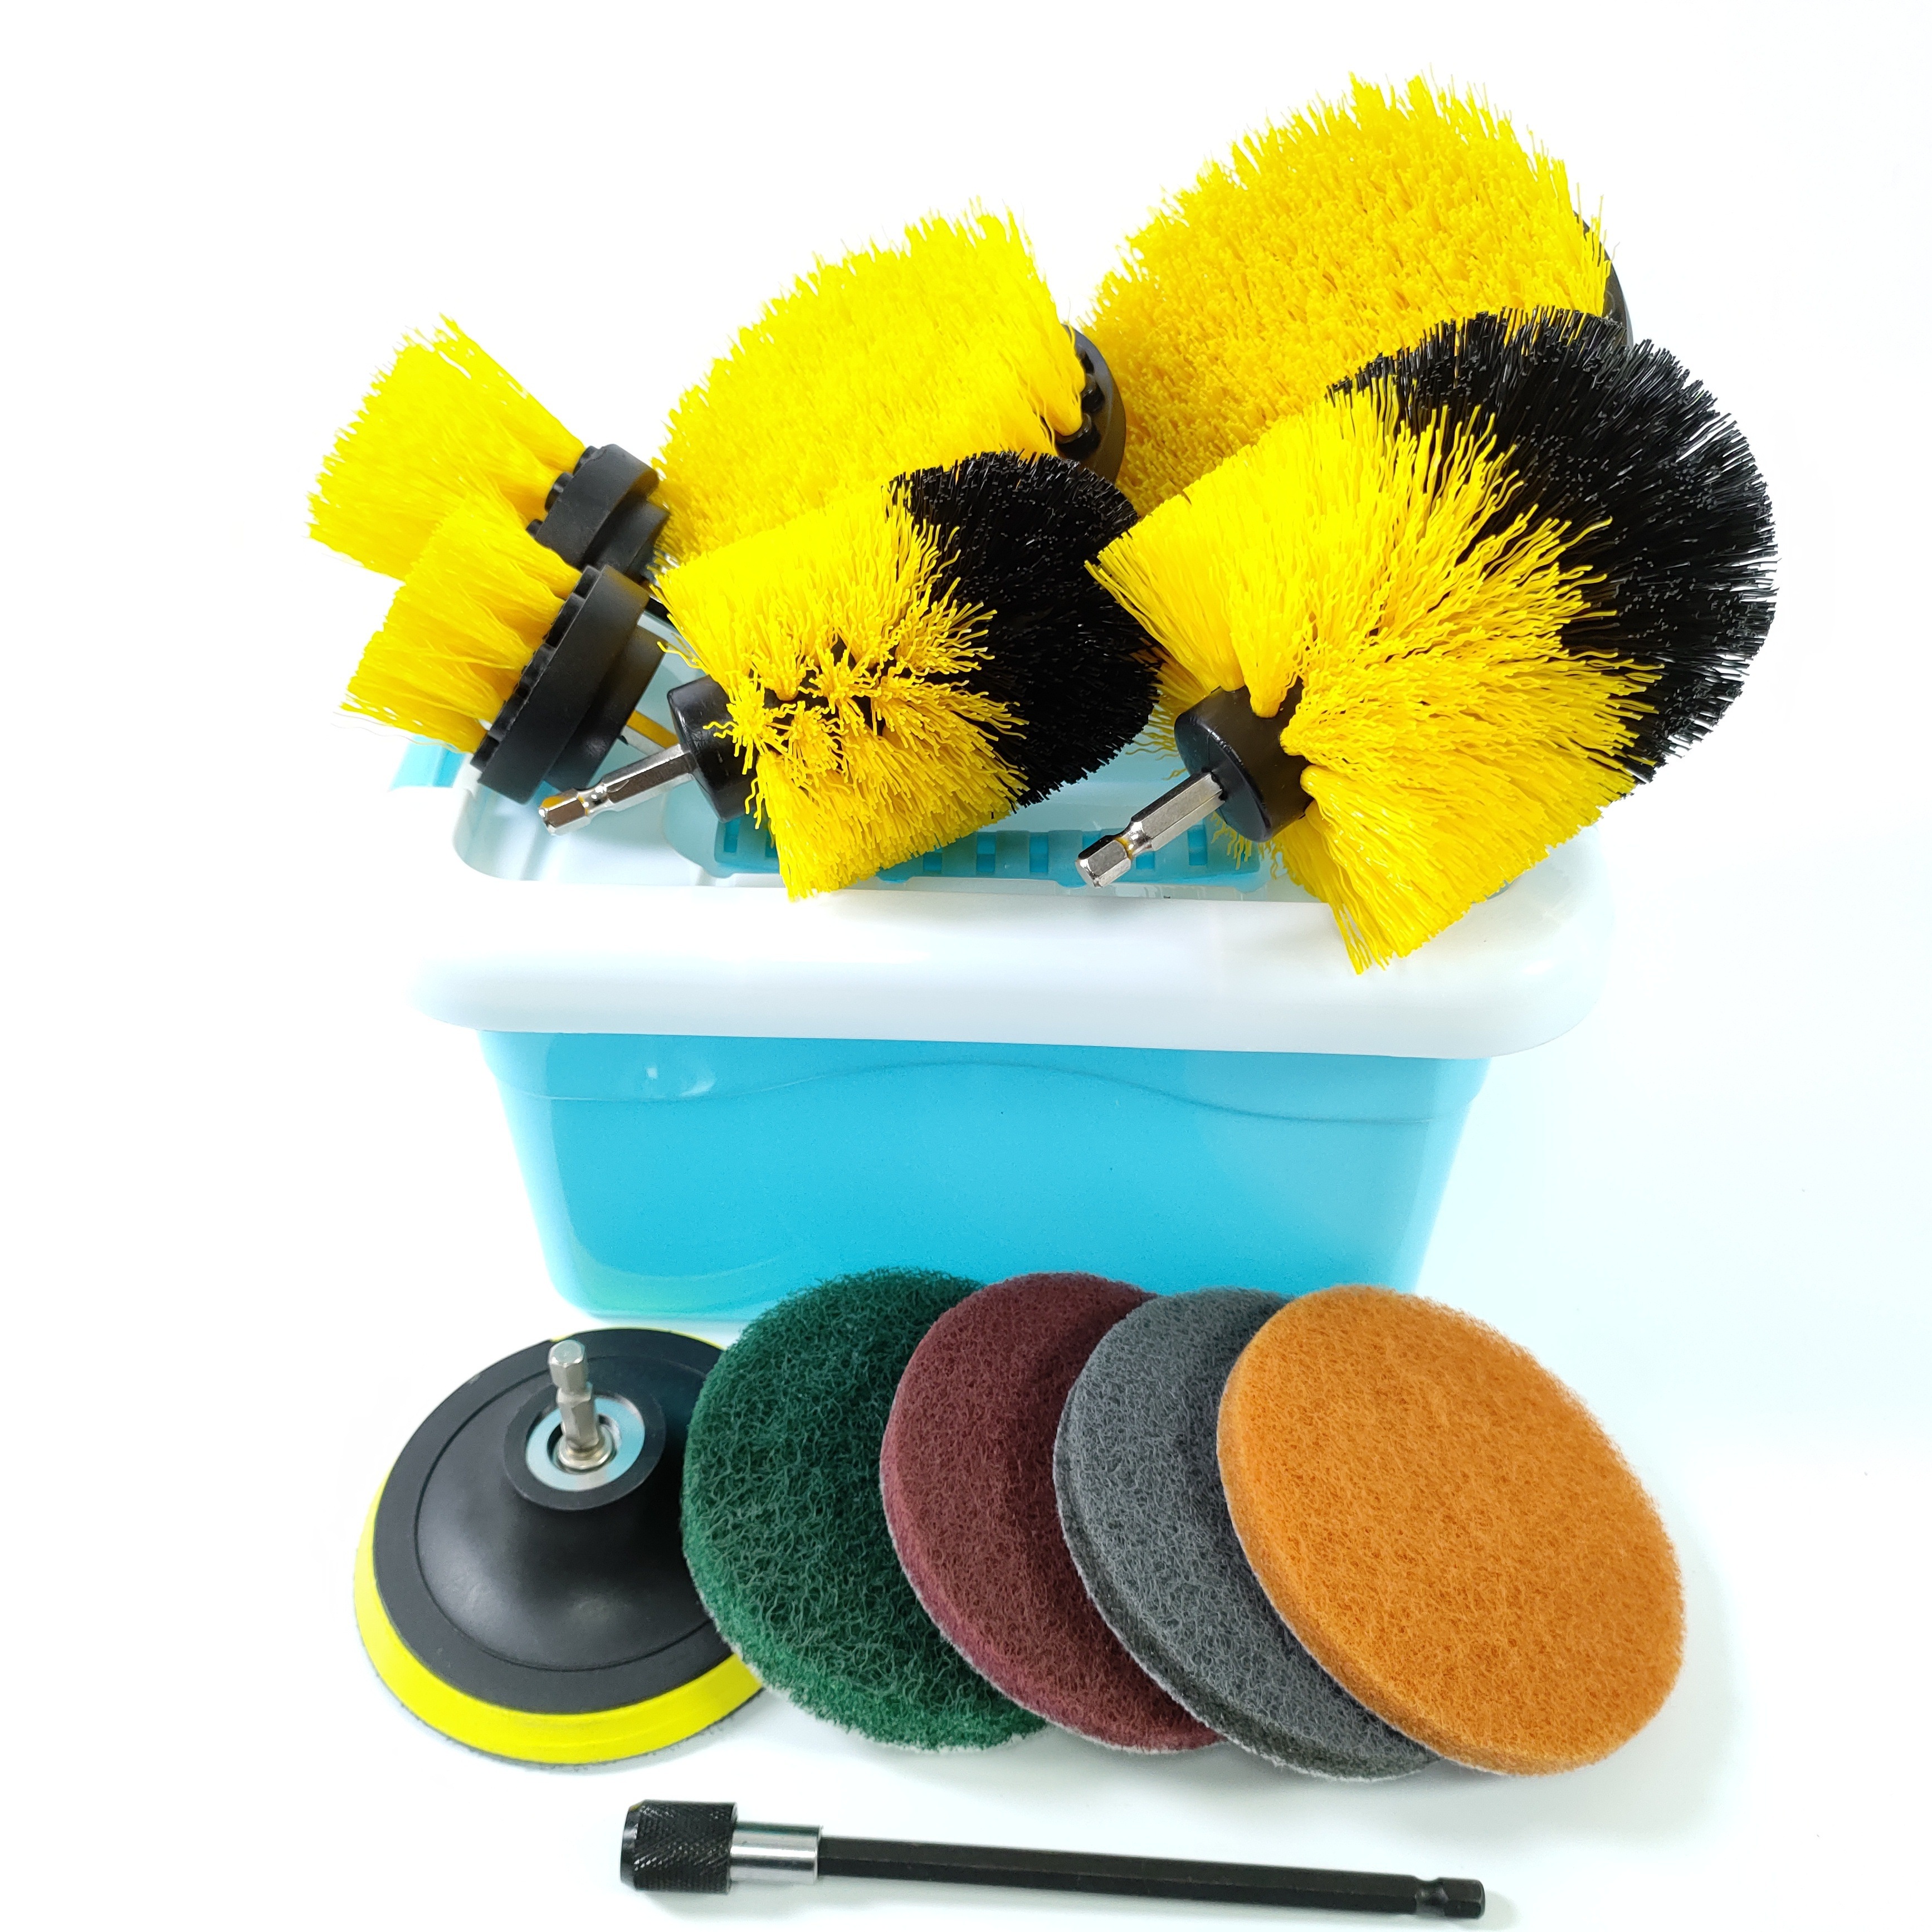 Carpet Cleaner - Bathroom Accessories - Mini Corner Drill Brush and 4-inch  Flat Scrub Brush Kit - Clean Bath Mat, Sink, Tile and Grout - Scrub Shower